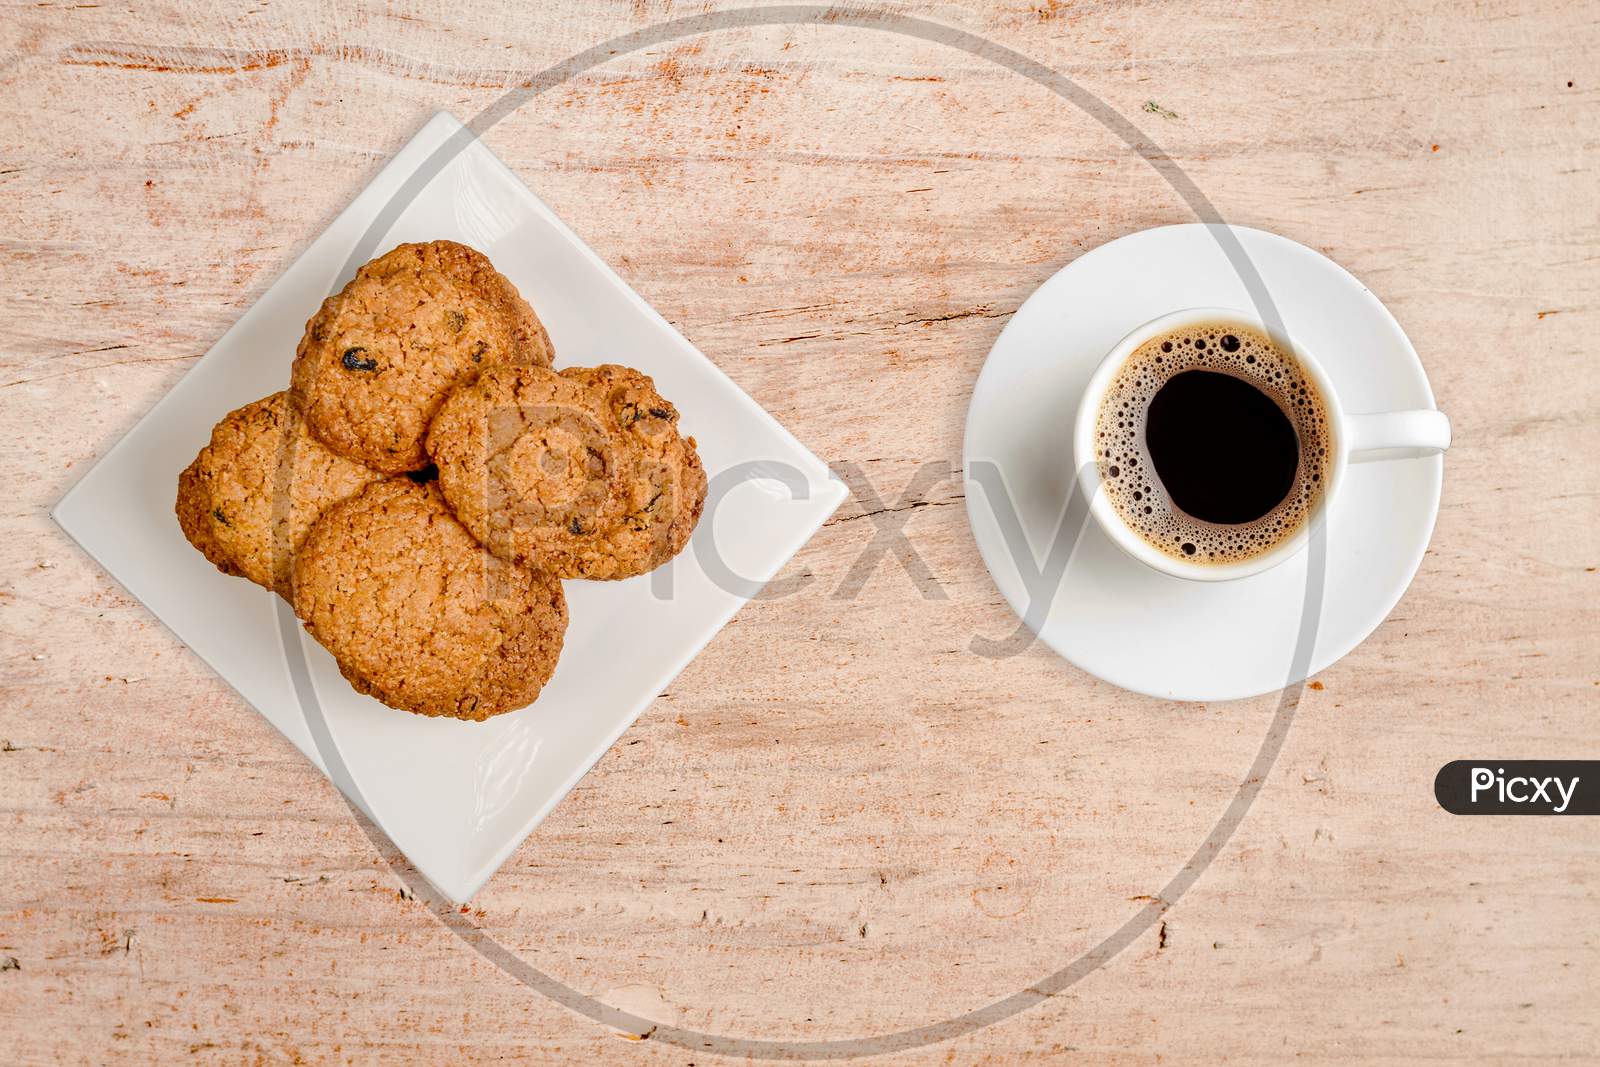 Oatmeal-raisin cookies and coffee